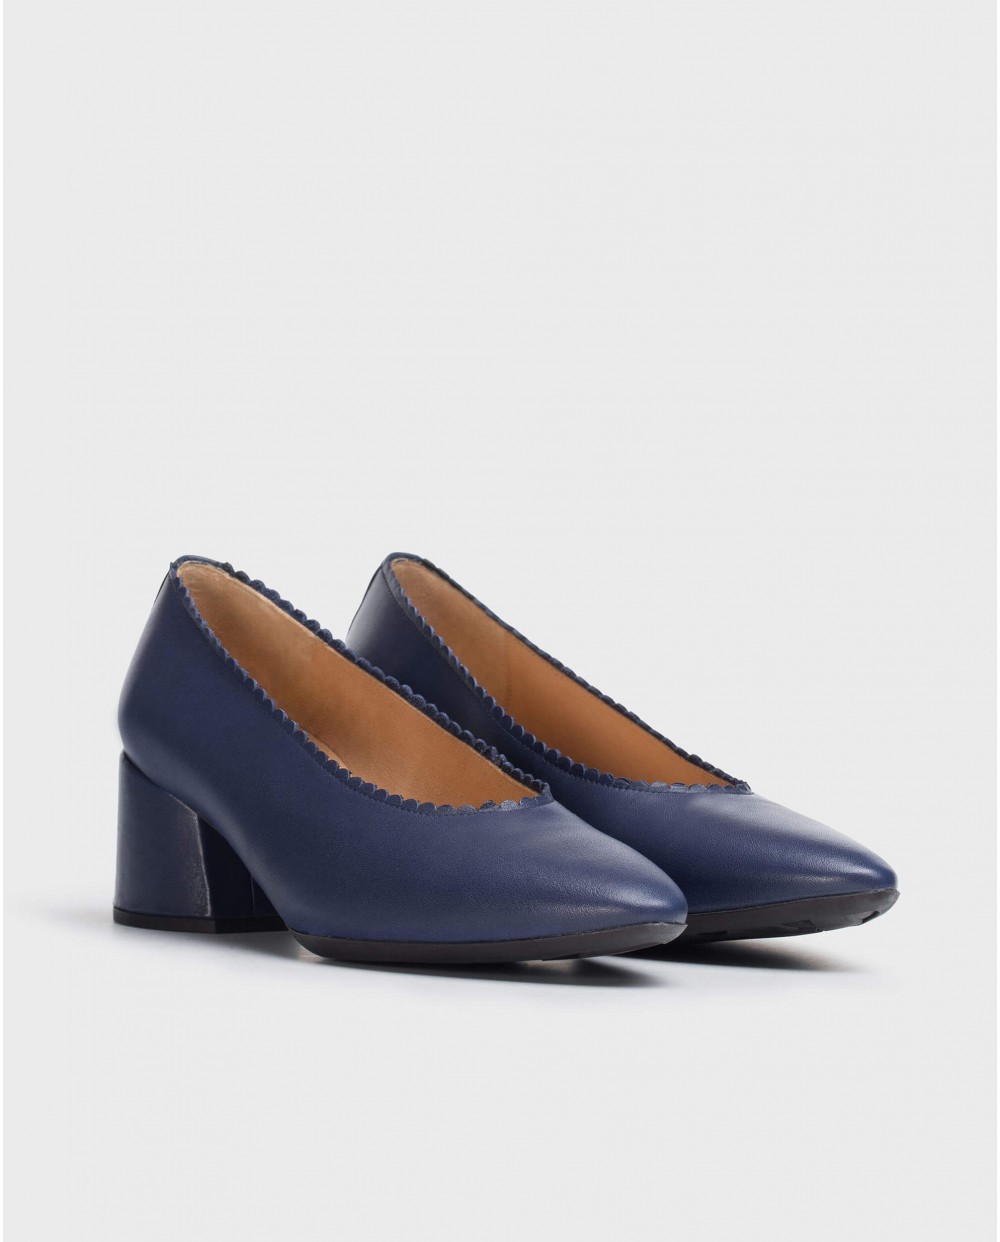 Wonders-Heels-Midi-heeled court shoe